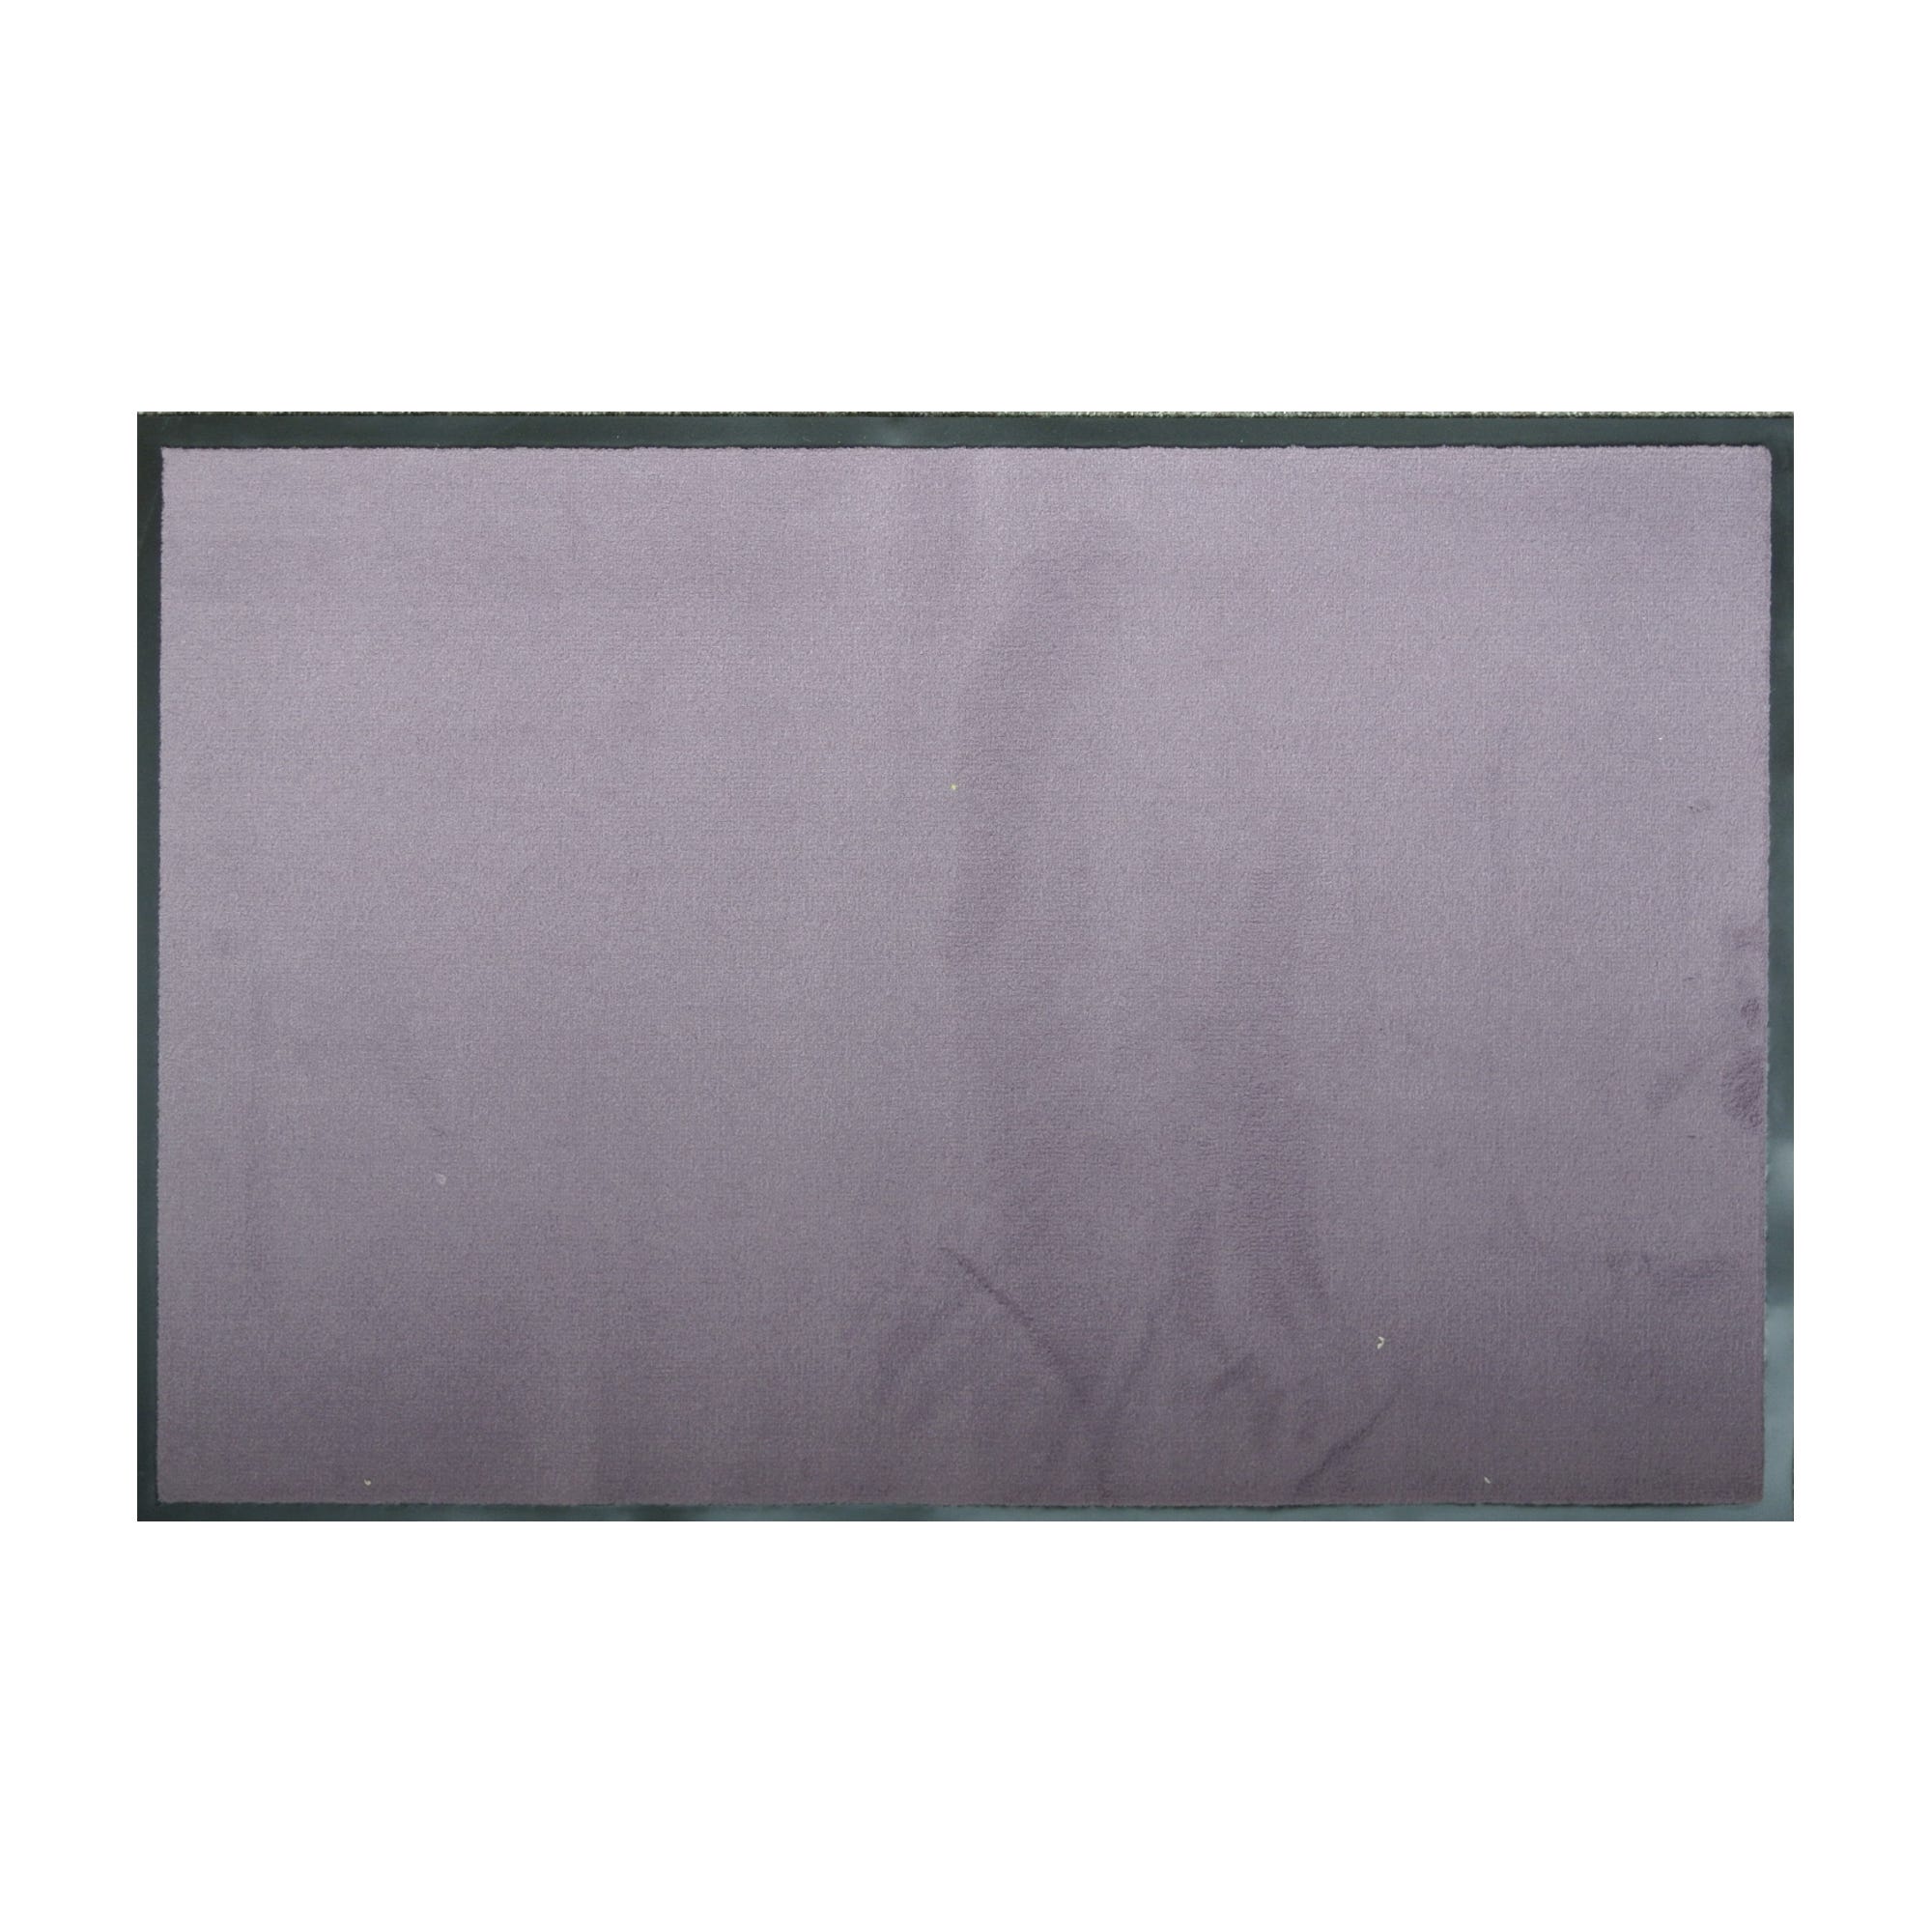 Tapis anti-poussière en Polypropylène coloris Gris - Largeur 90 x